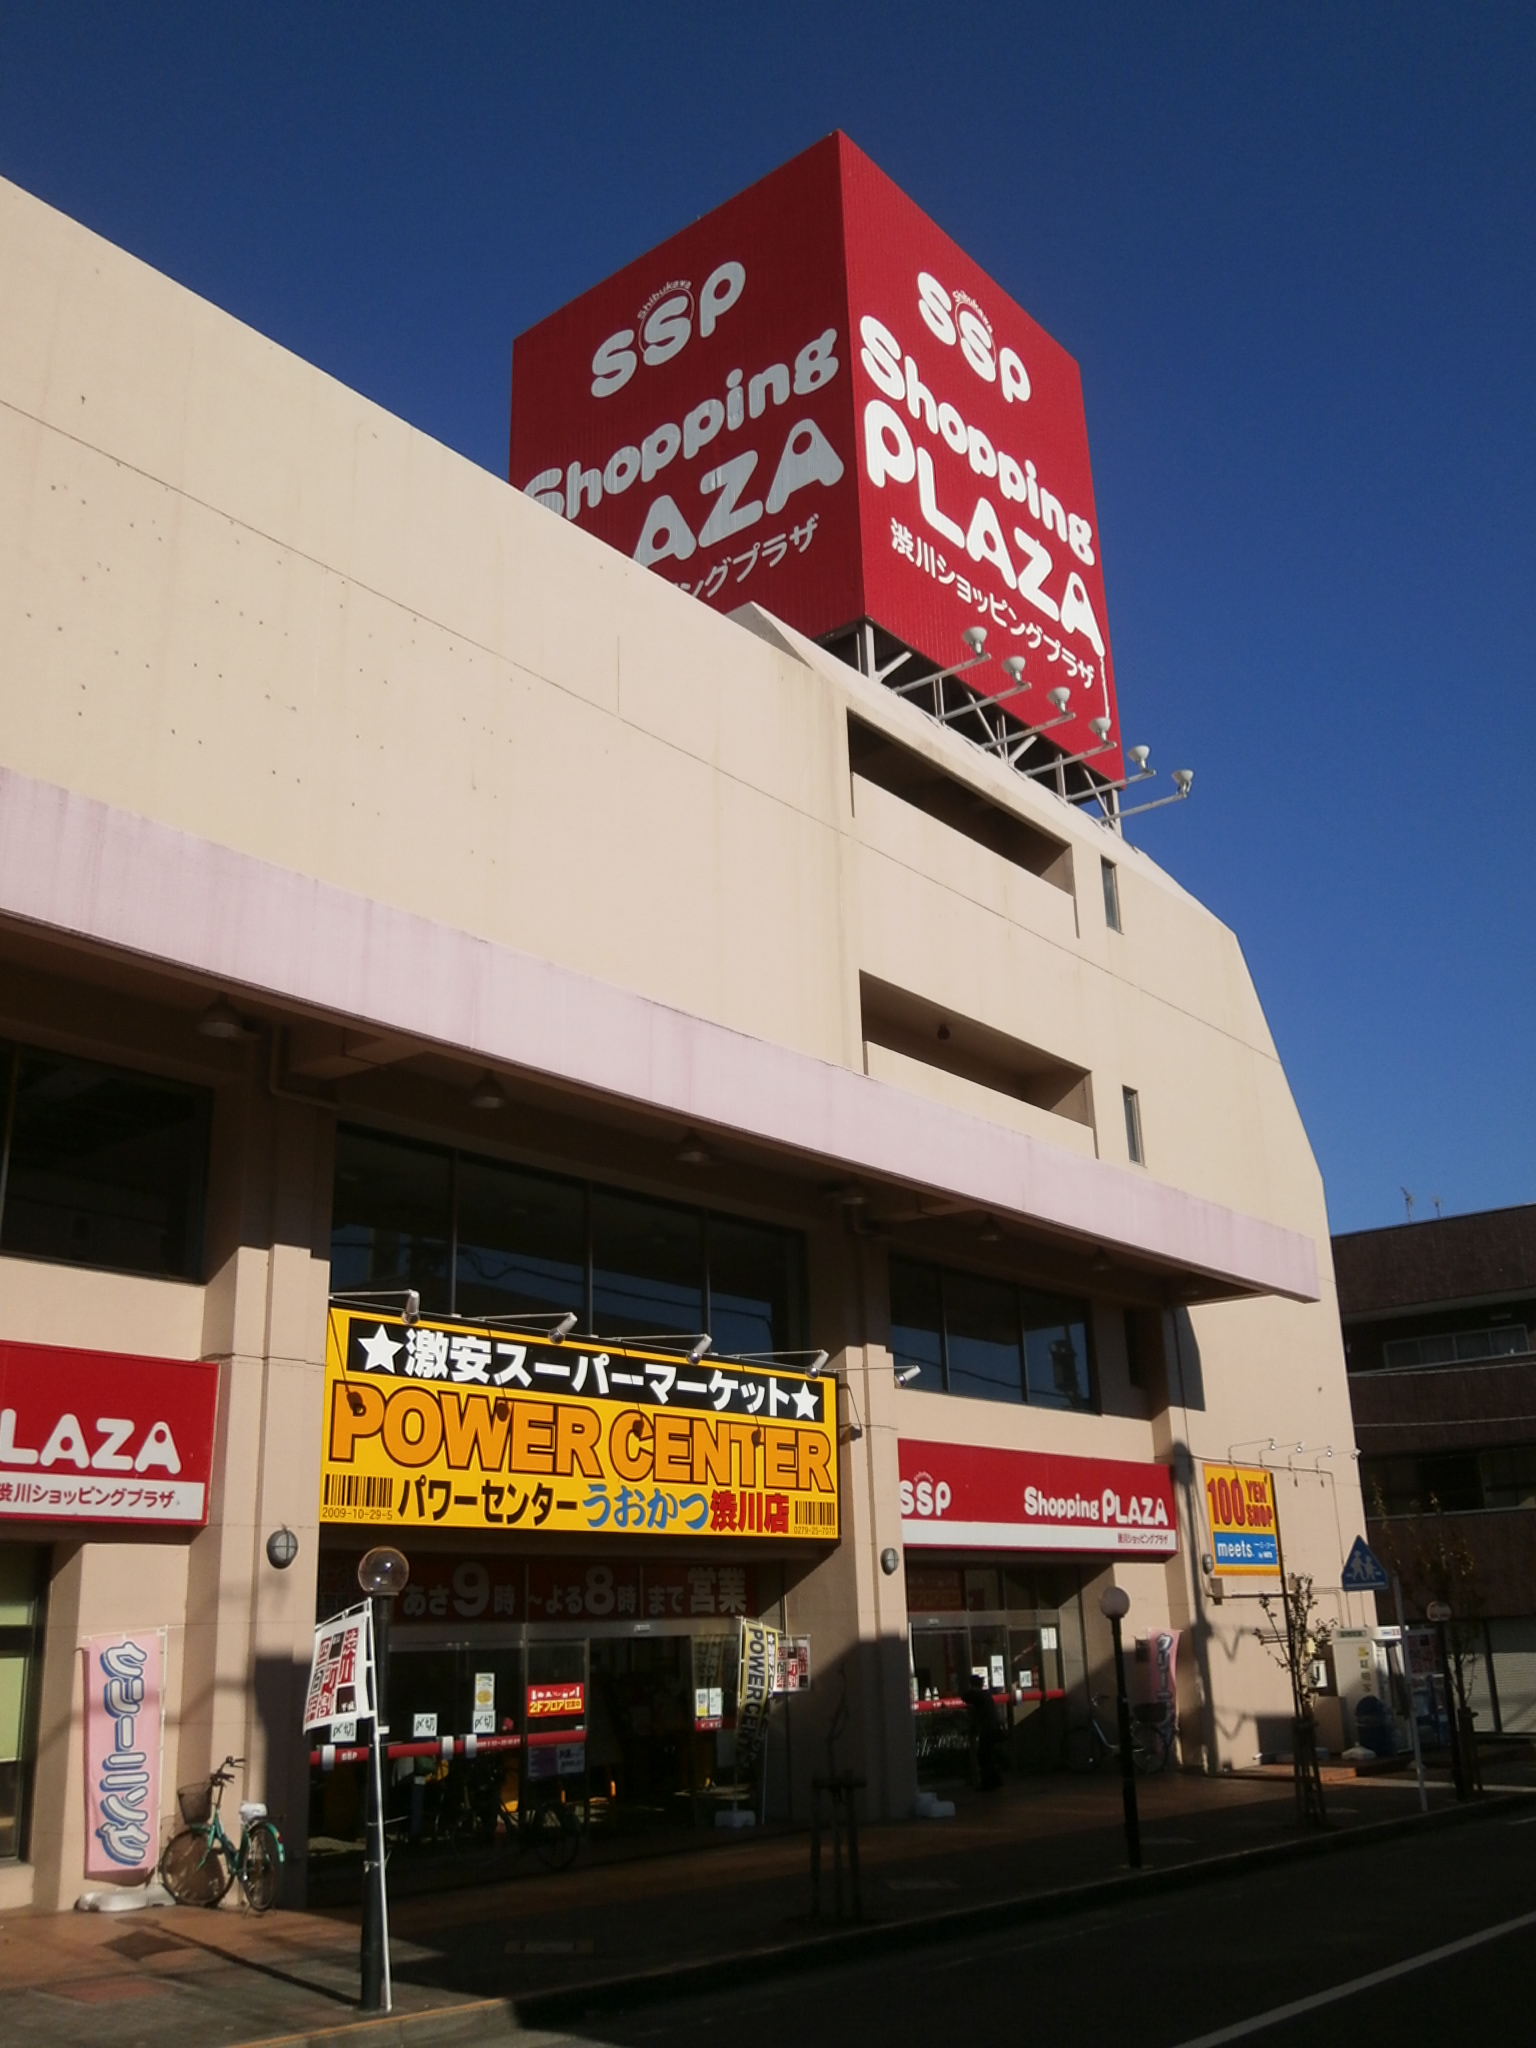 Supermarket. Power center fish and Shibukawa store up to (super) 1231m